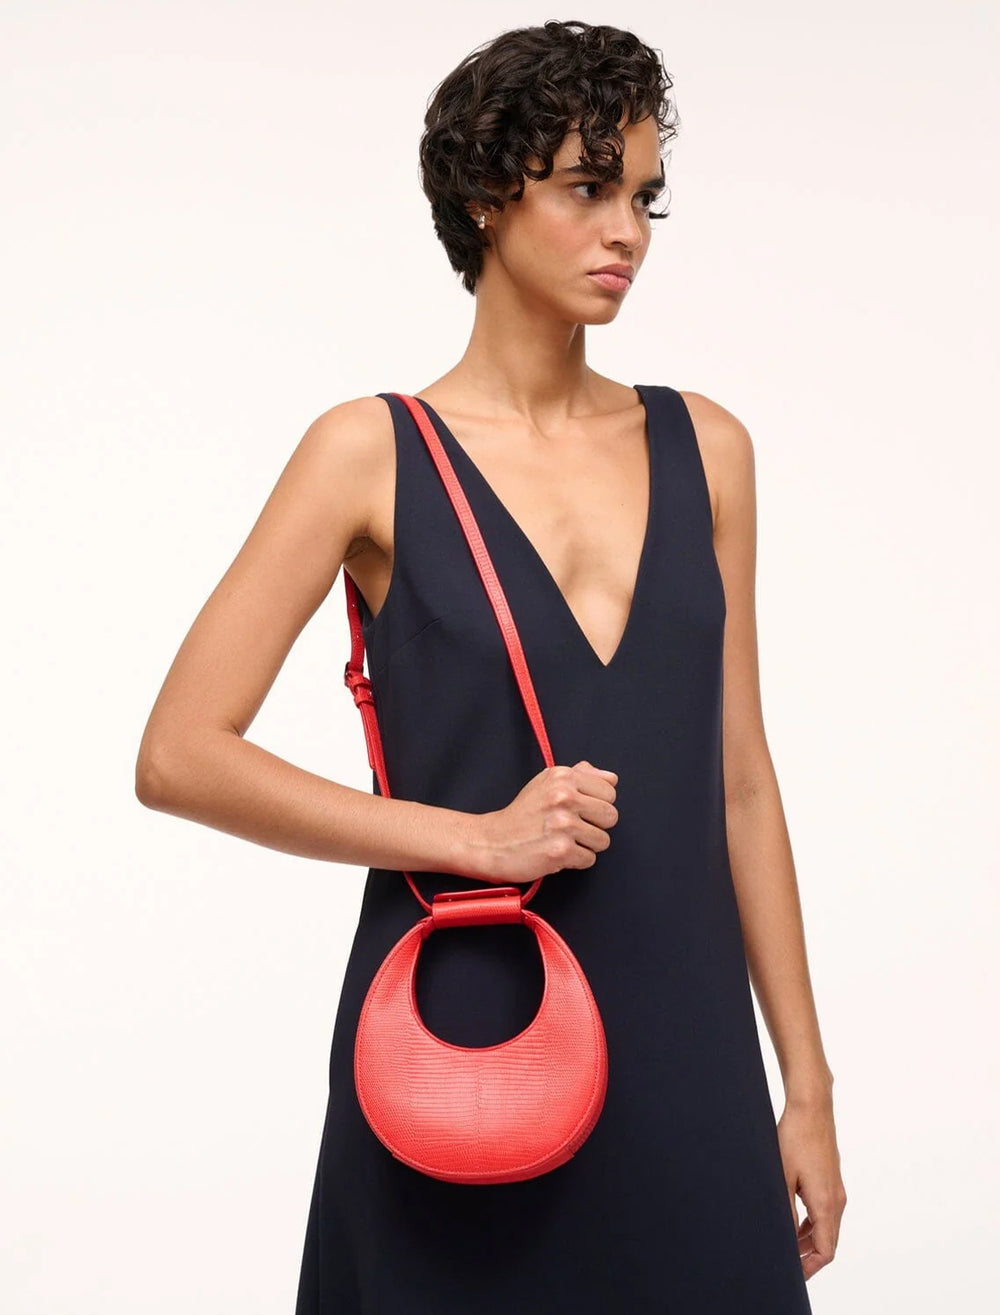 Model wearing STAUD's good night moon bag in red rose on her shoulder.